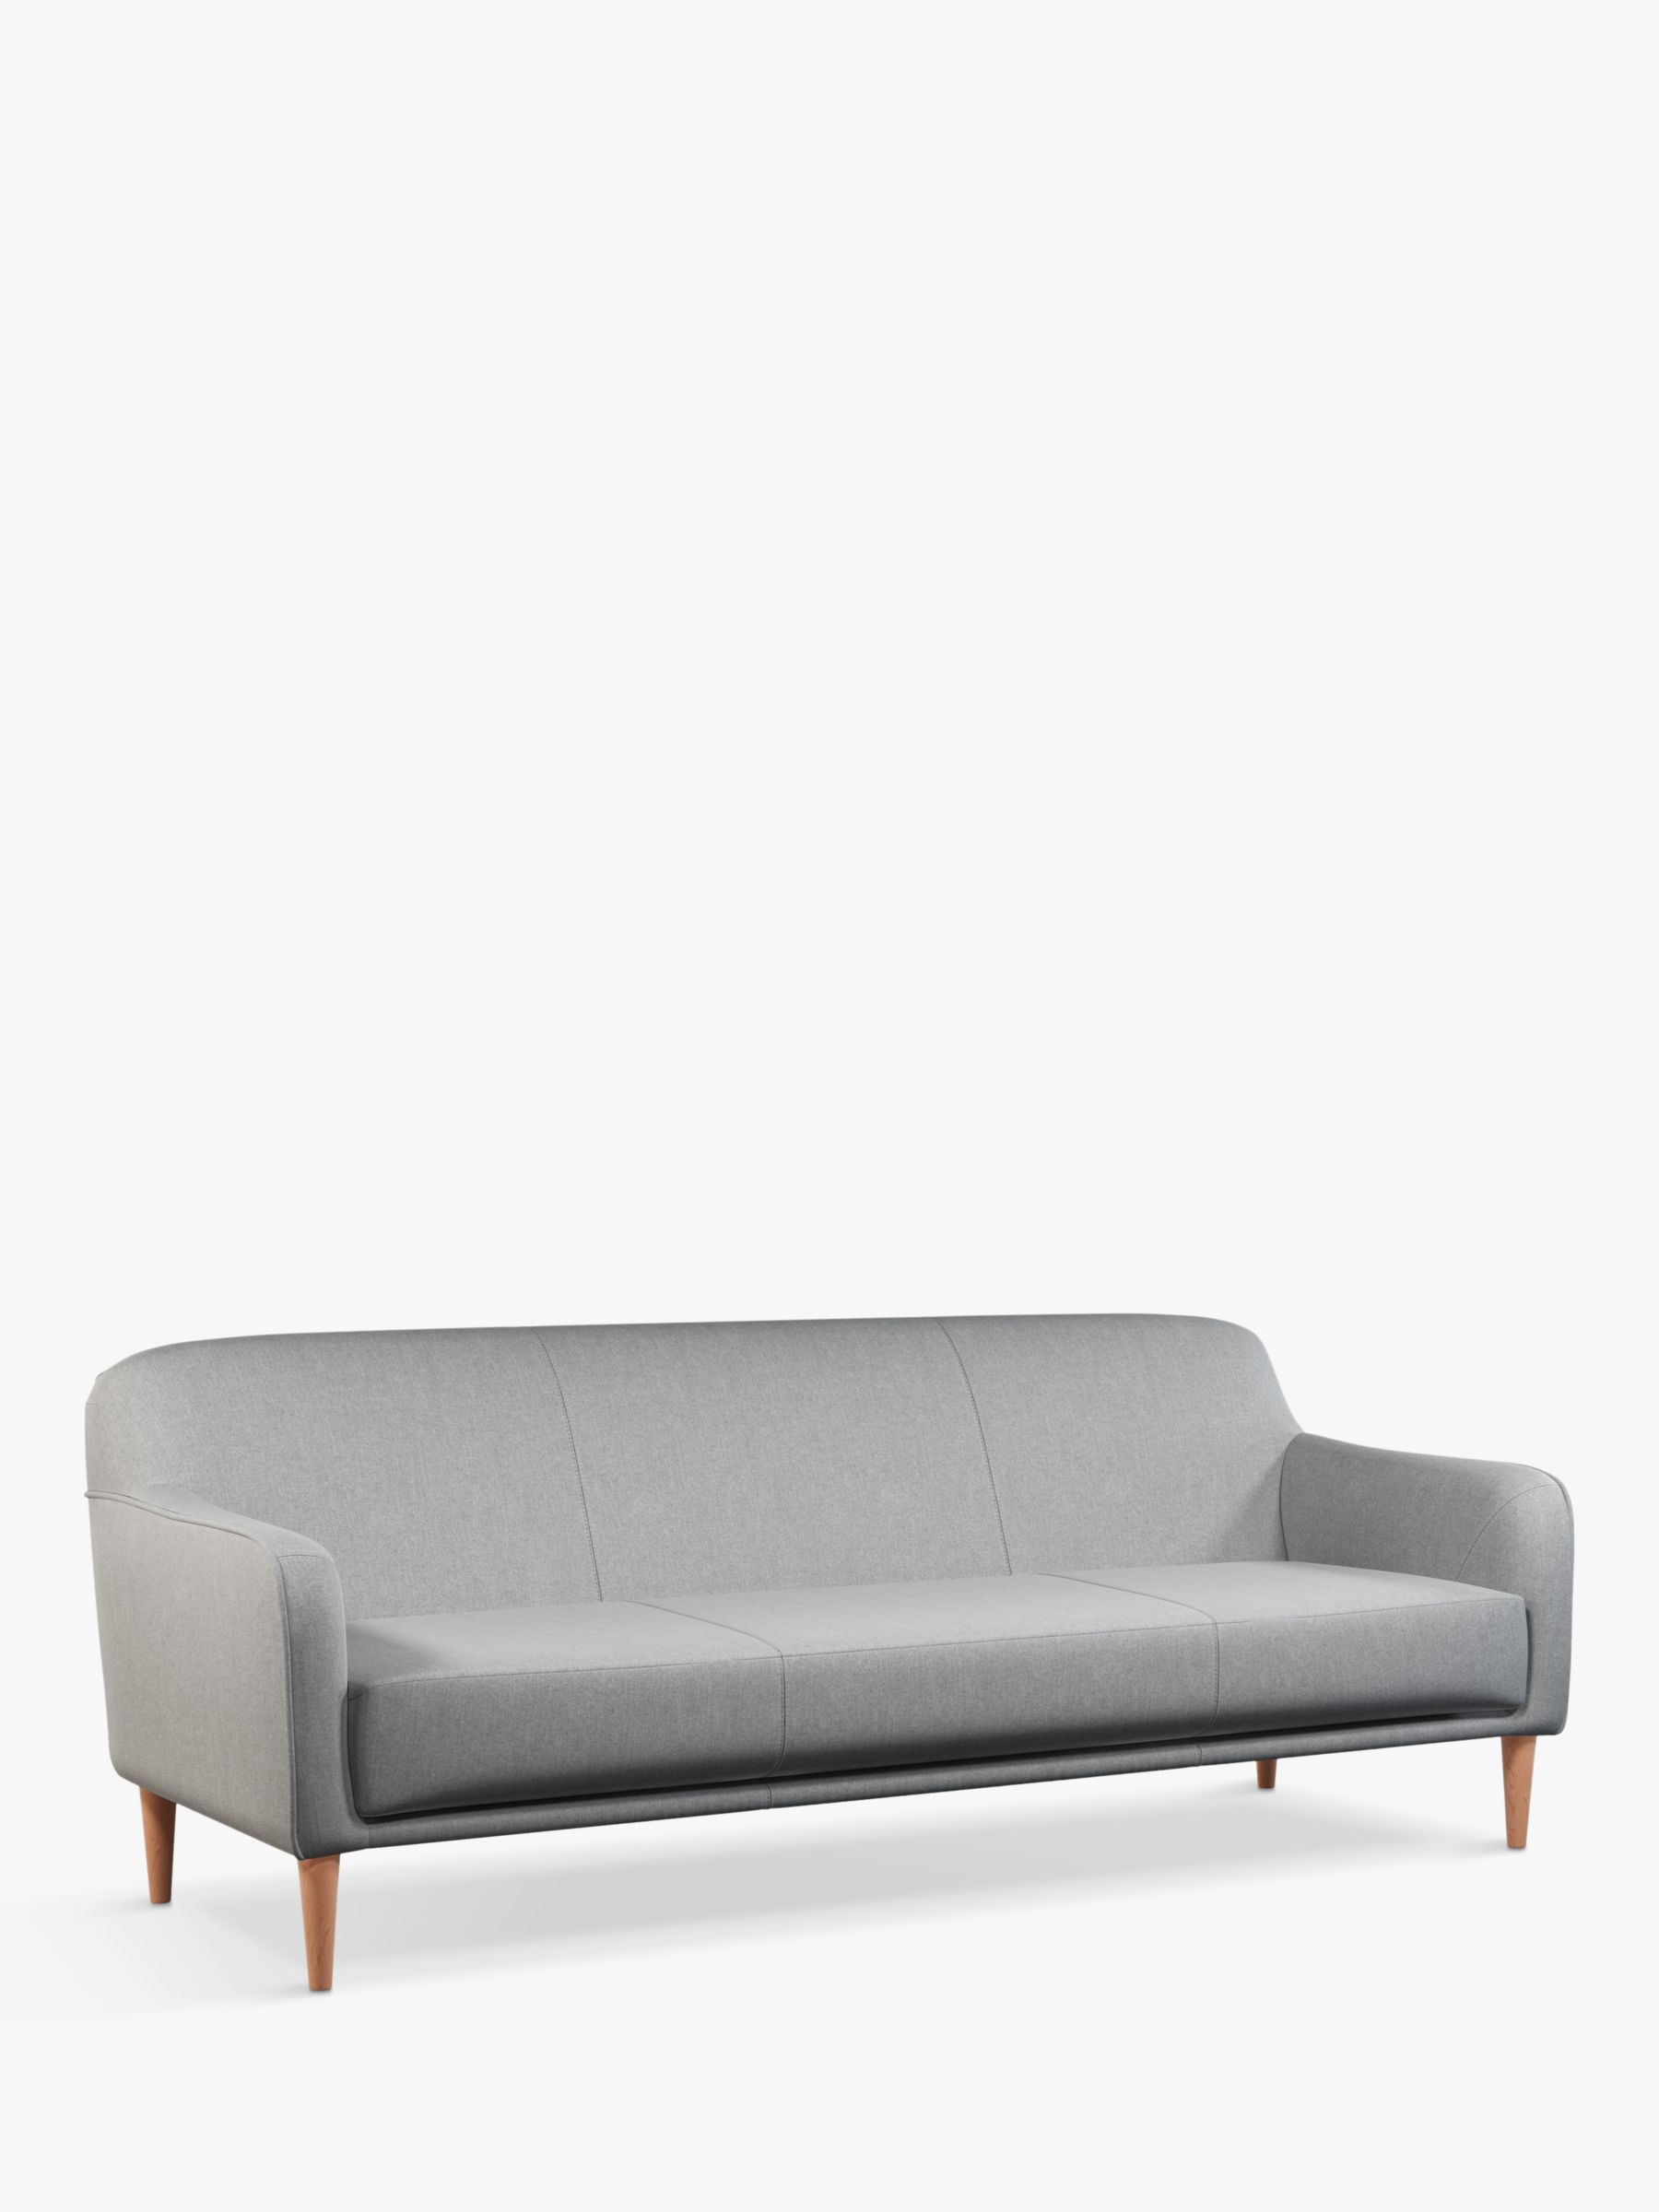 John Lewis & Partners Compact Large 3 Seater Sofa, Light Leg, Soft Weave Light Grey